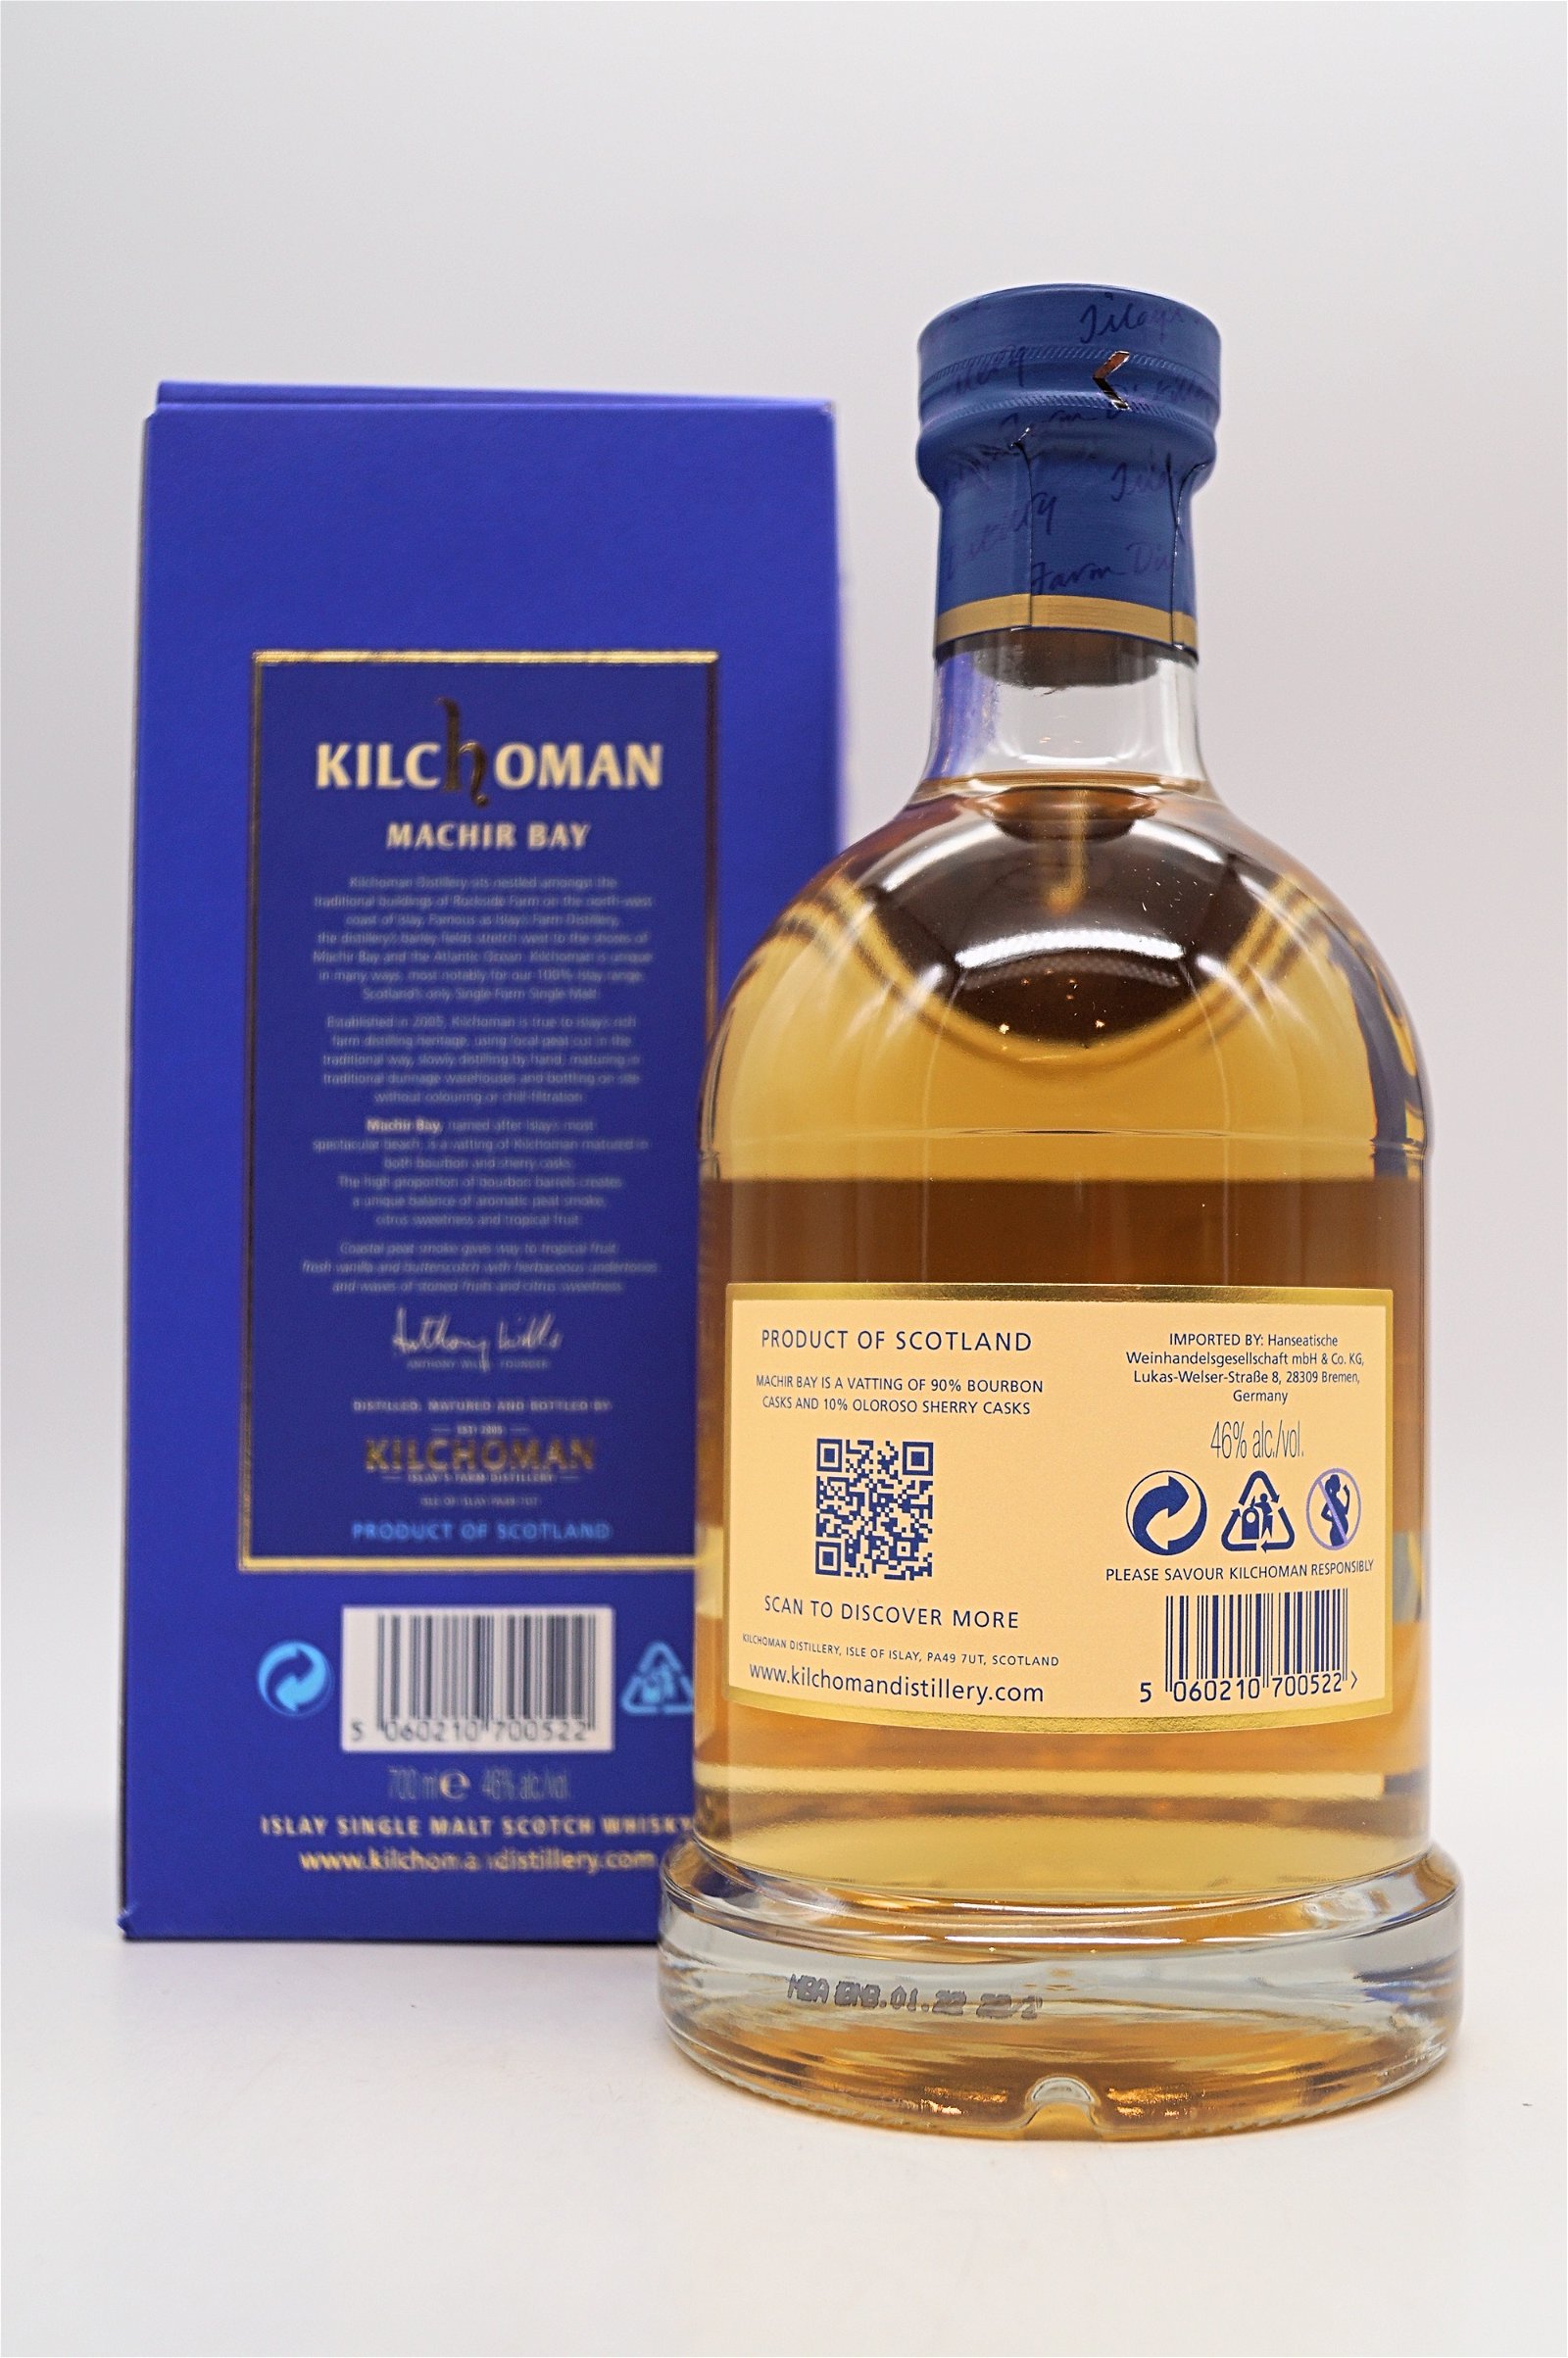 Kilchoman Machir Bay Uniquely Islay Single Malt Scotch Whisky